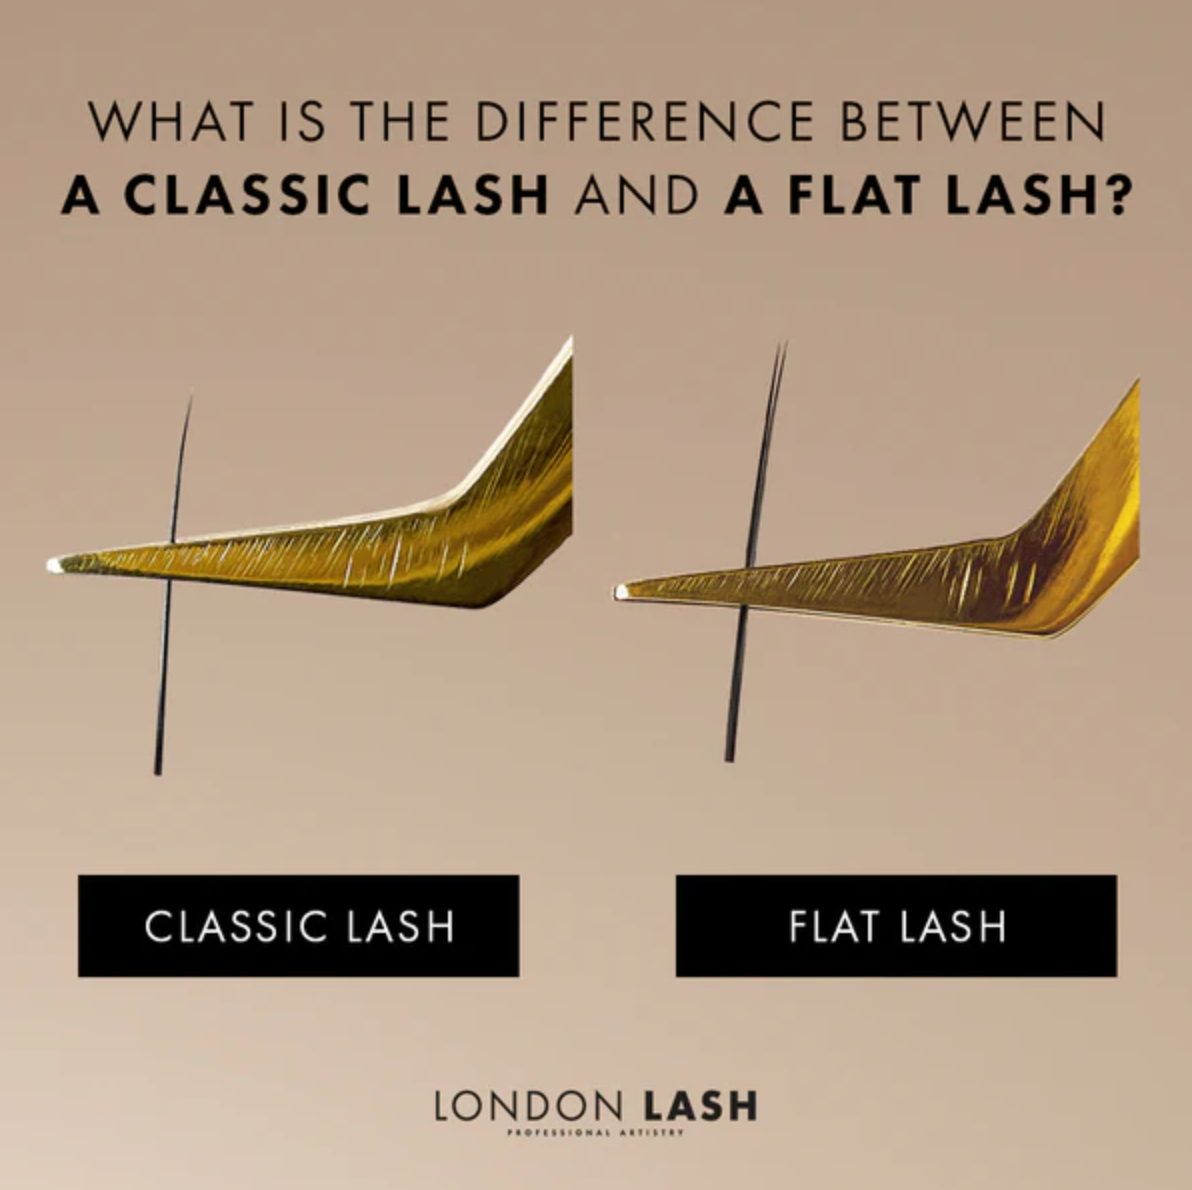 Classic lash and flat lash | London Lash AU